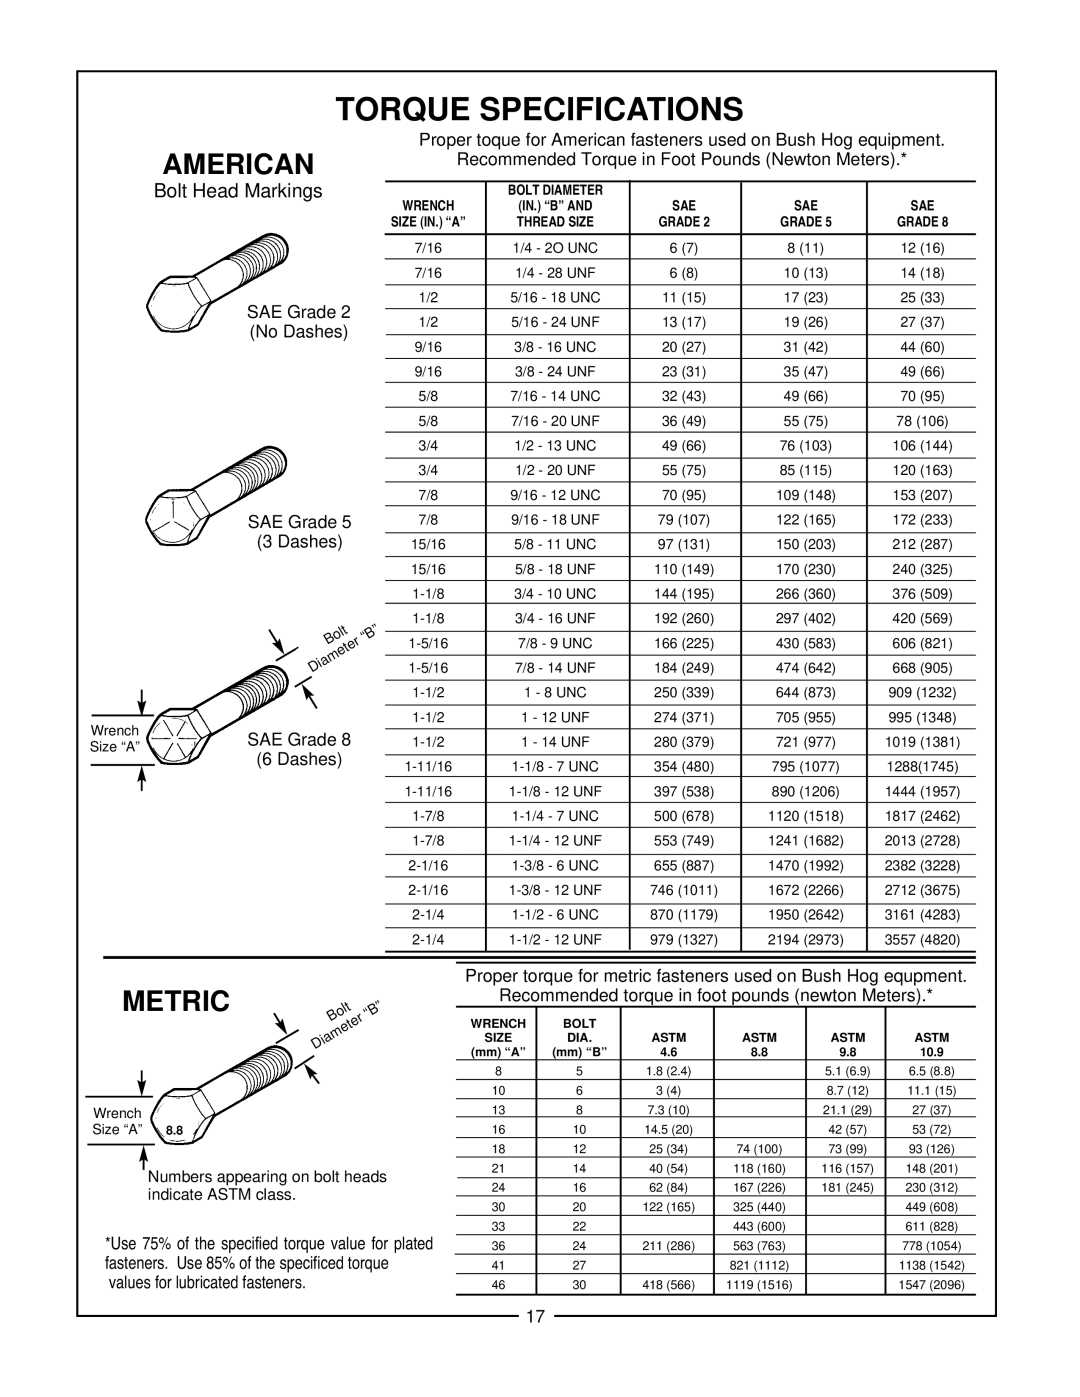 Bush Hog RDTH 84 manual Torque Specifications, American, Metric 